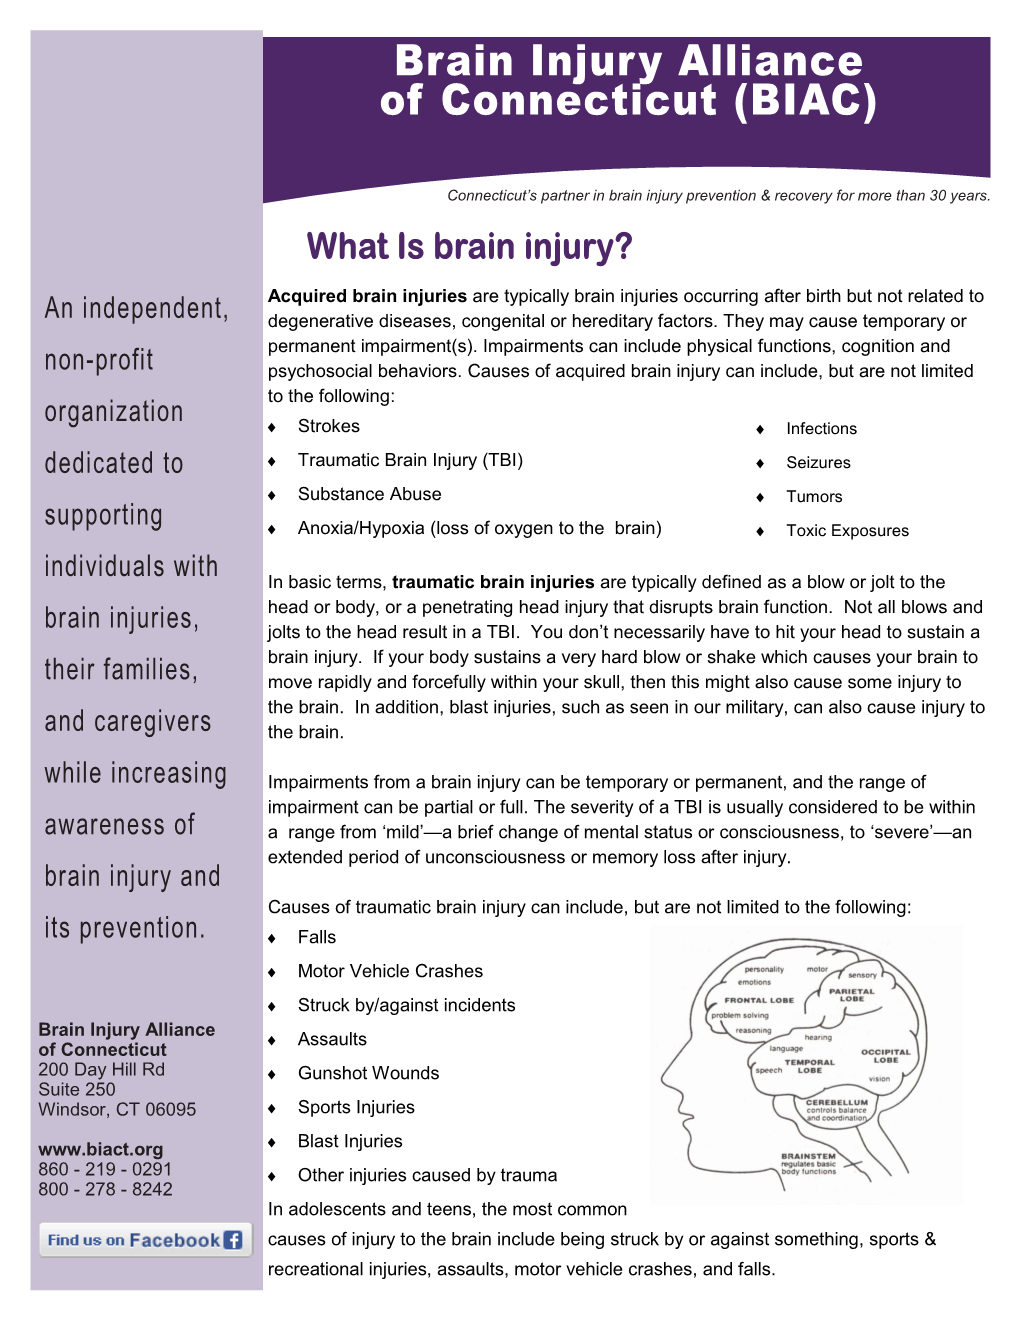 Brain Injury 101 Reading Assignment